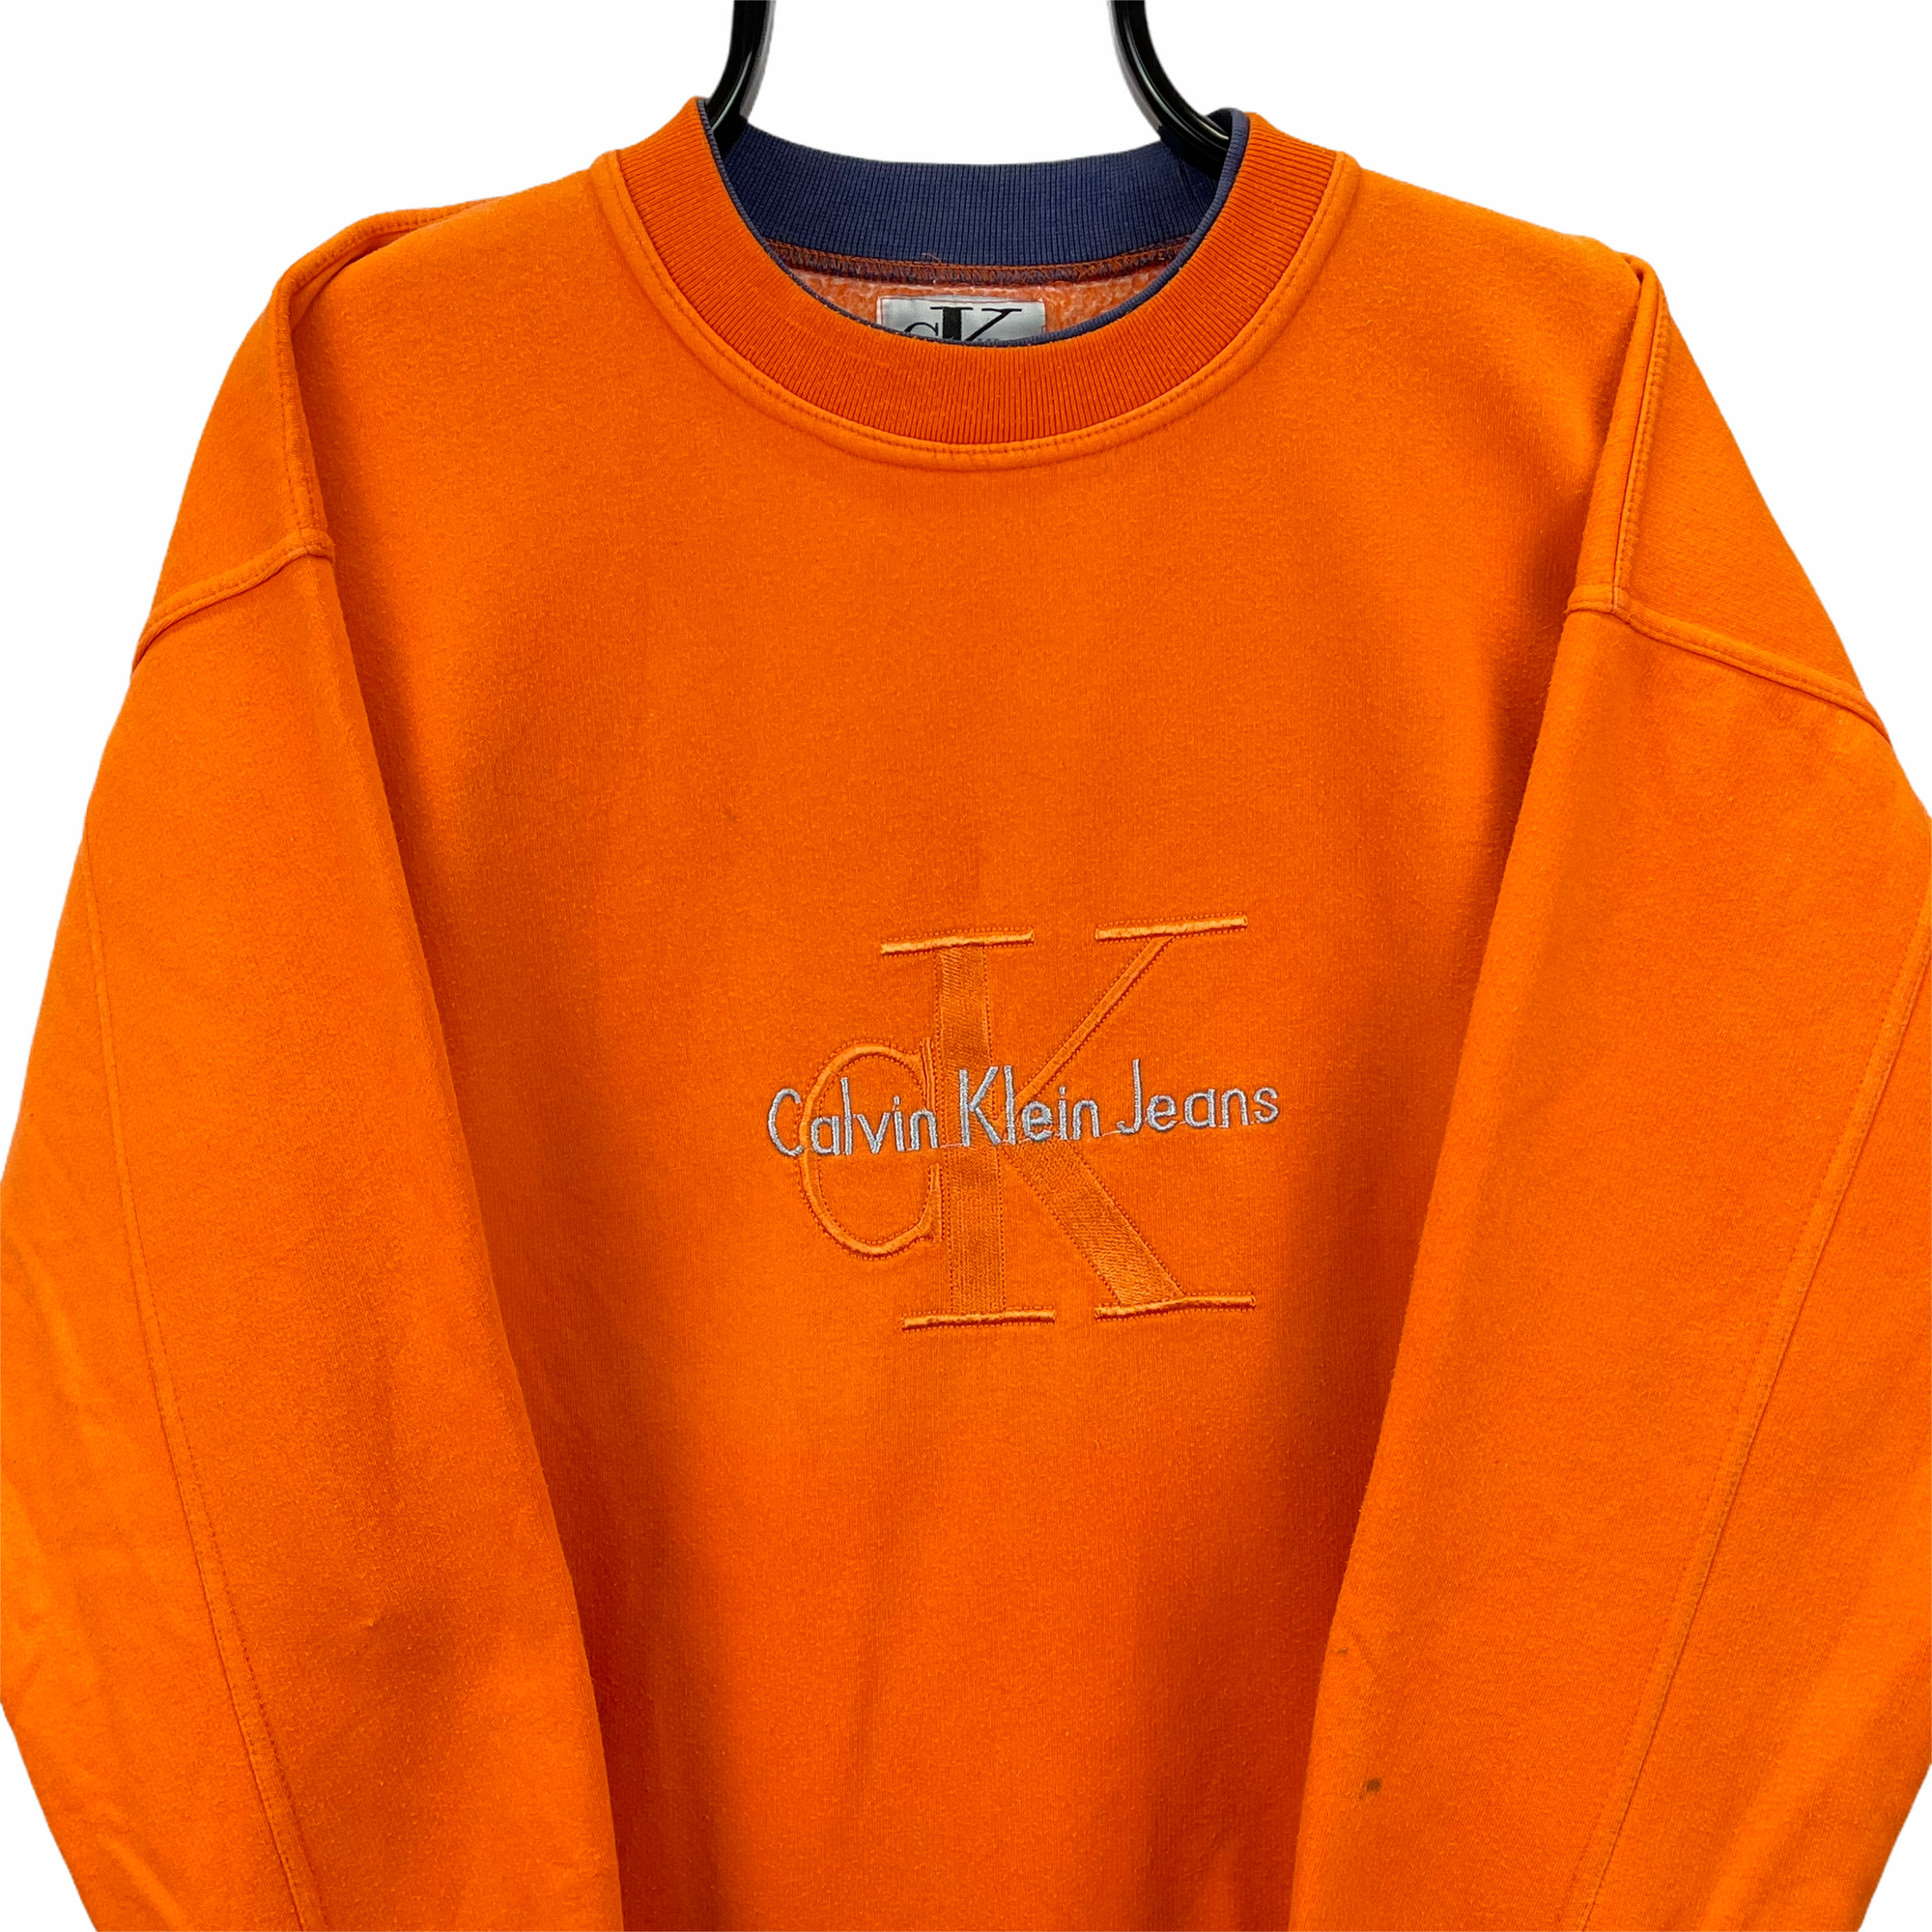 Vintage 90s Calvin Klein Spellout Sweatshirt in Orange - Men's Large/Women's XL